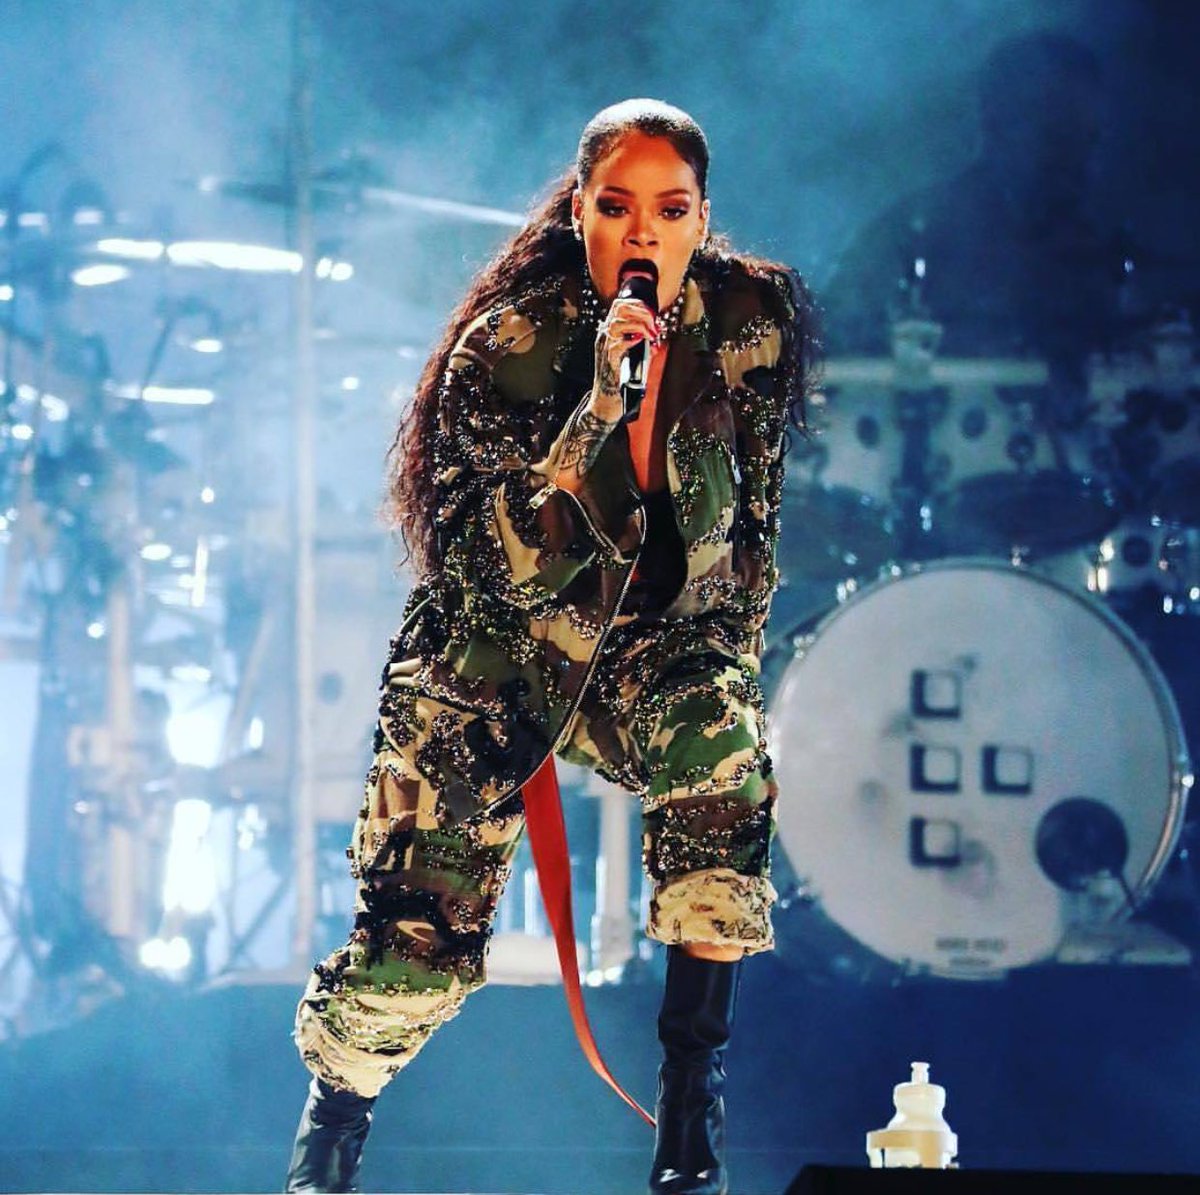 Rihanna performs ‘Love On The Brain’ in Abu Dhabi - ~ * Toya'z World